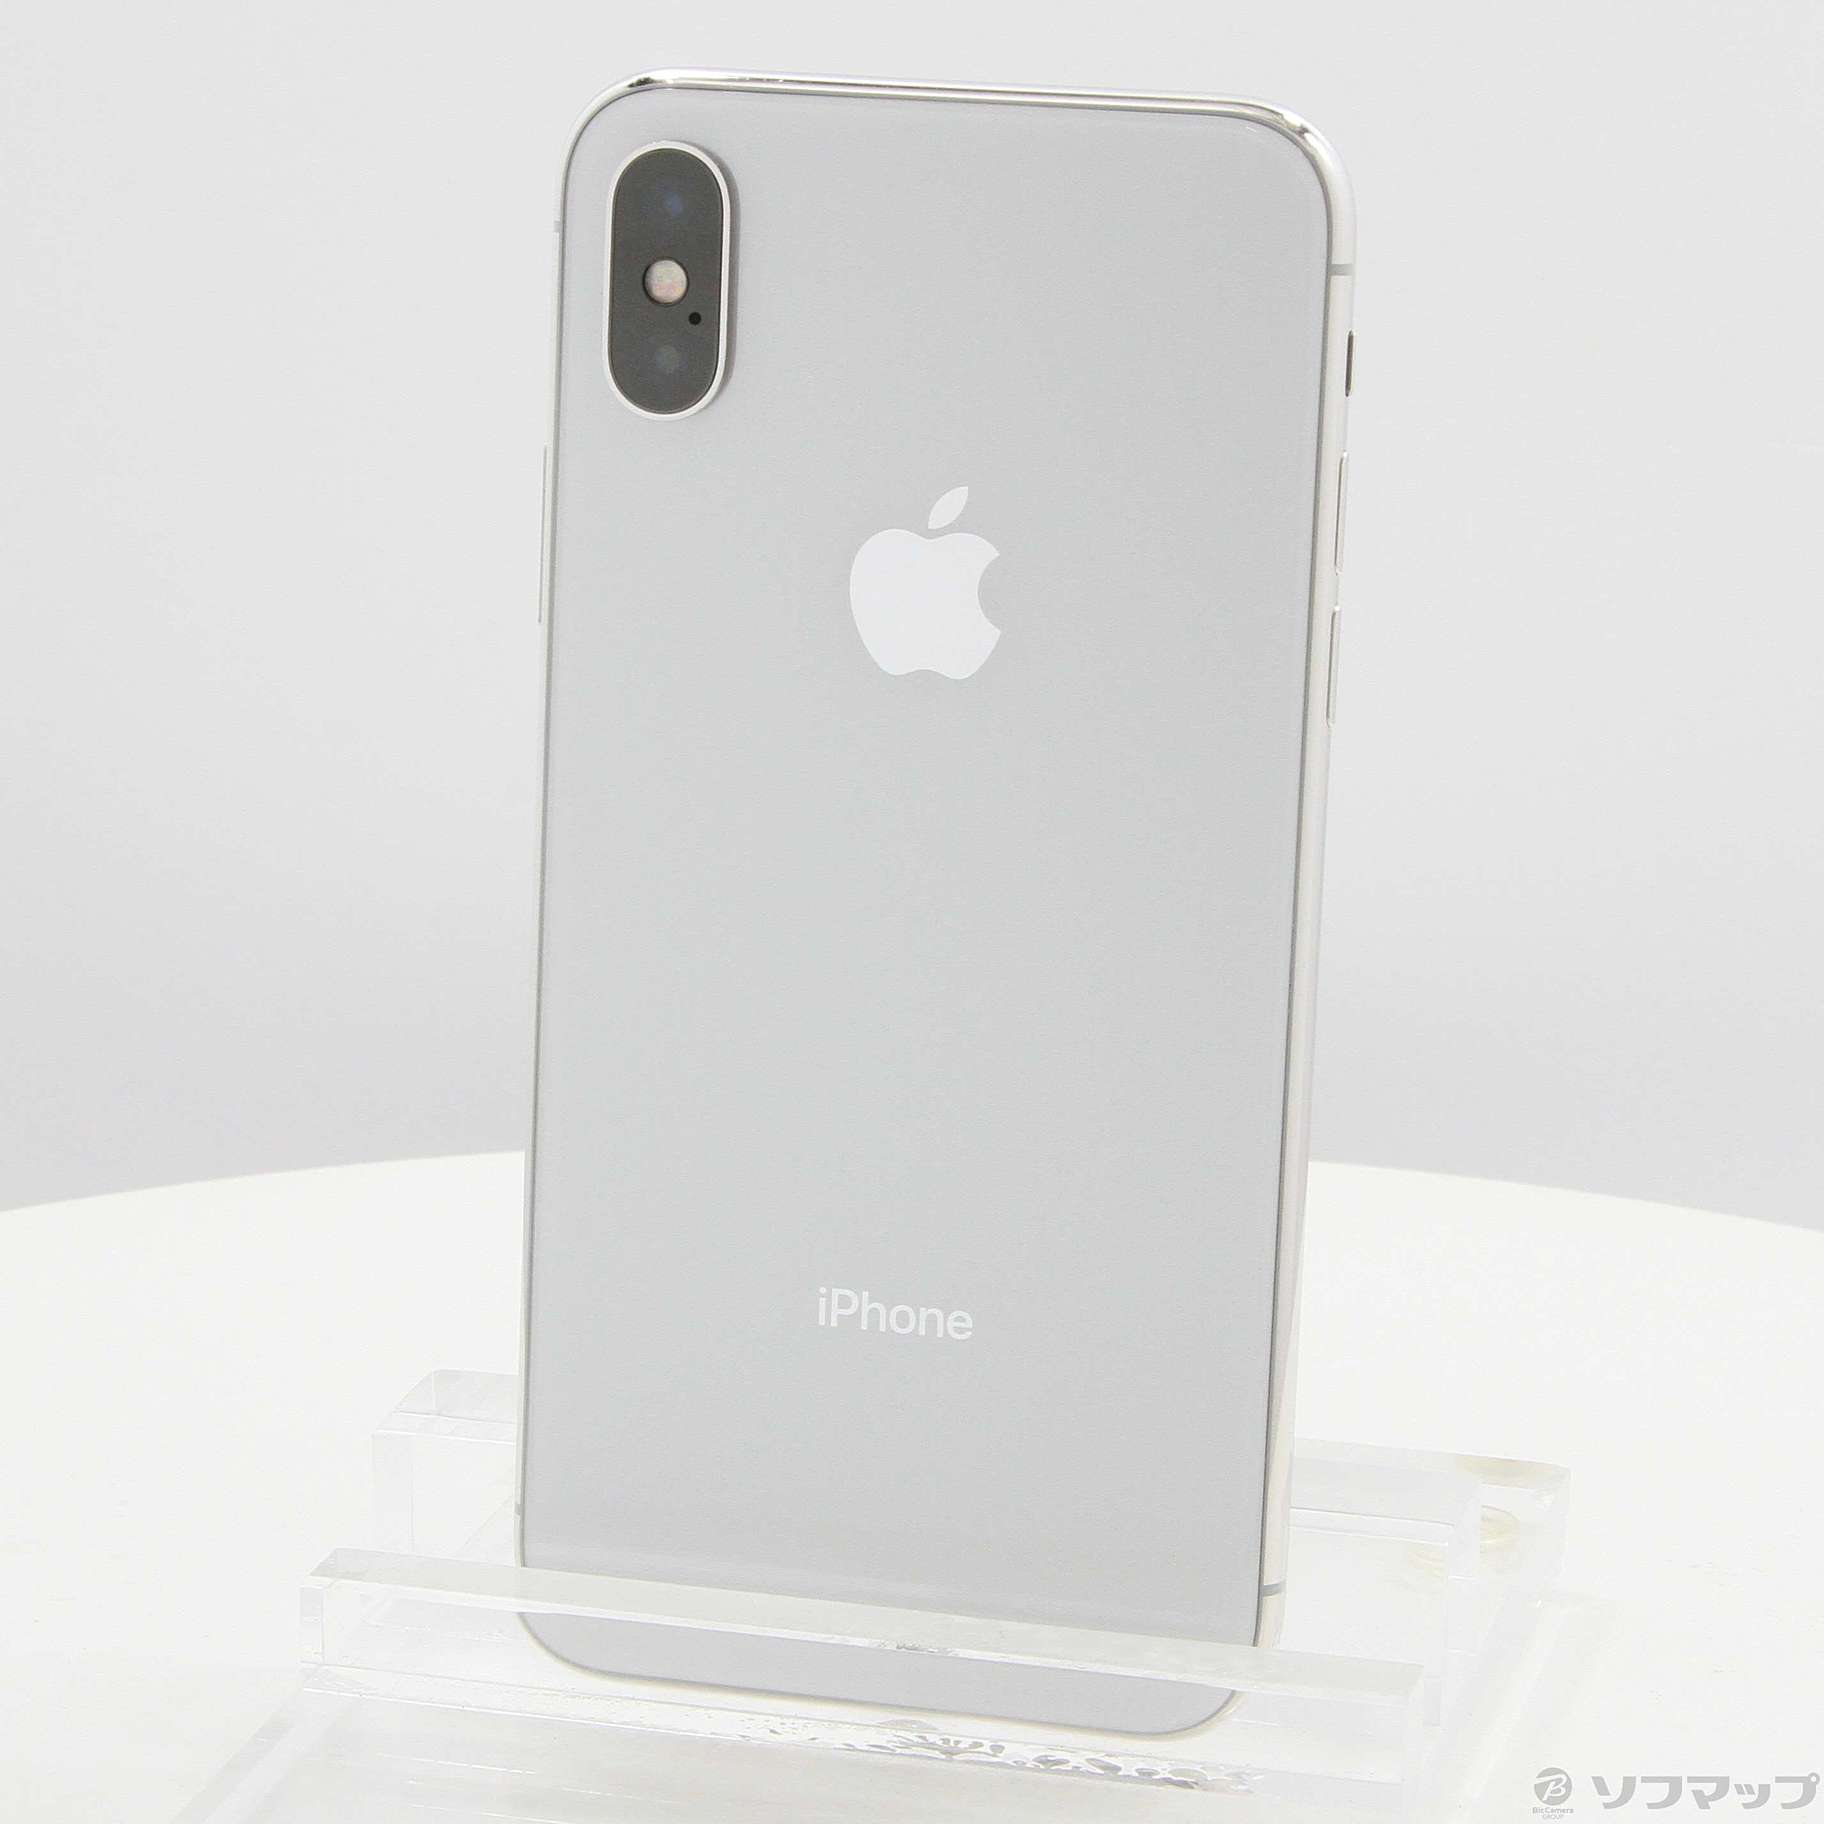 iPhone X Silver 64GB - スマートフォン本体